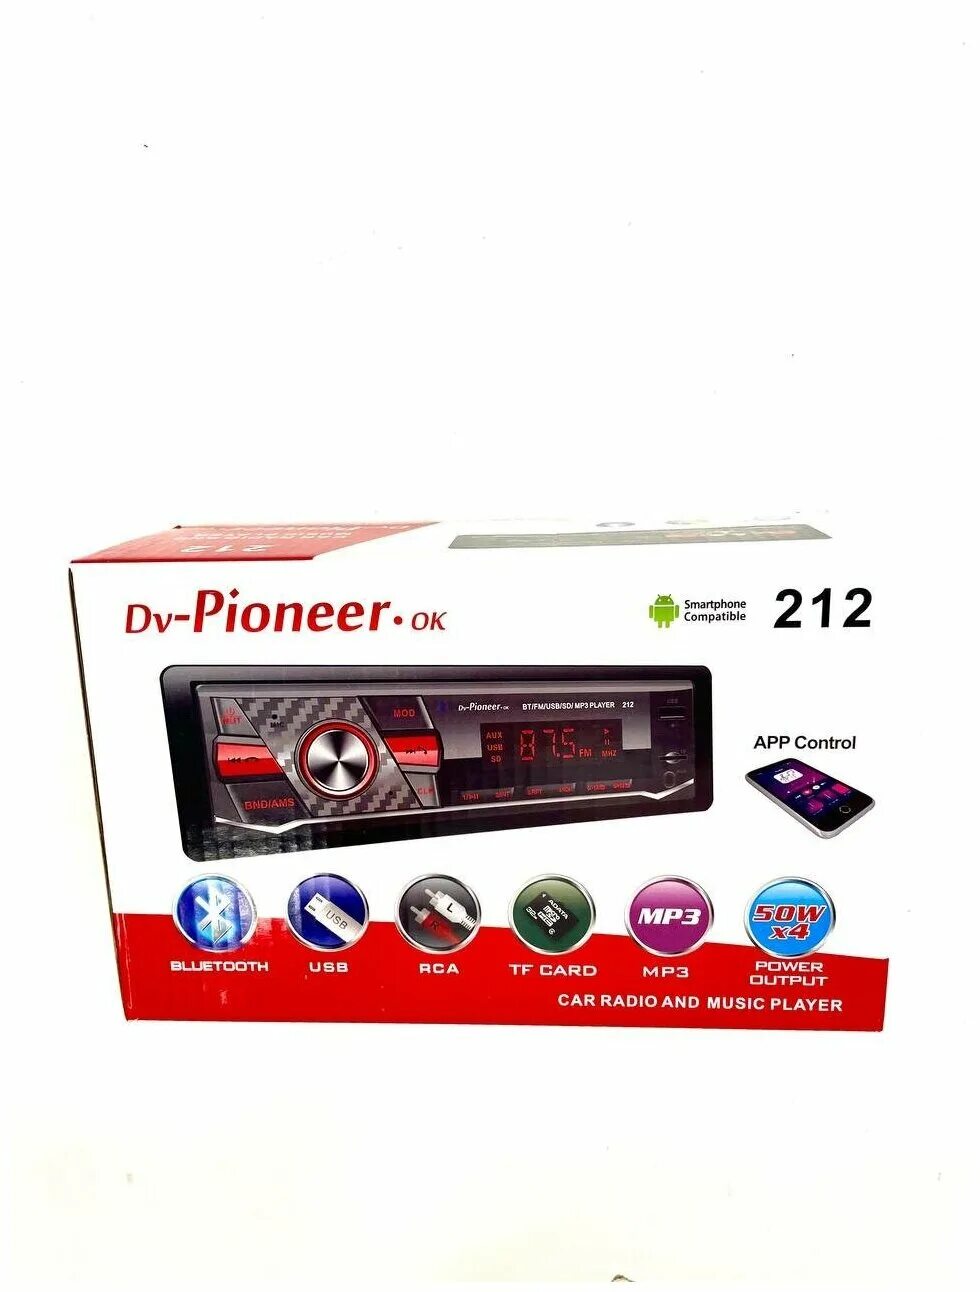 Pioneer ok 212. Автомагнитола DV-Pioneer.ok. DV Pioneer ok 163. Автомагнитола Pioneer v212.